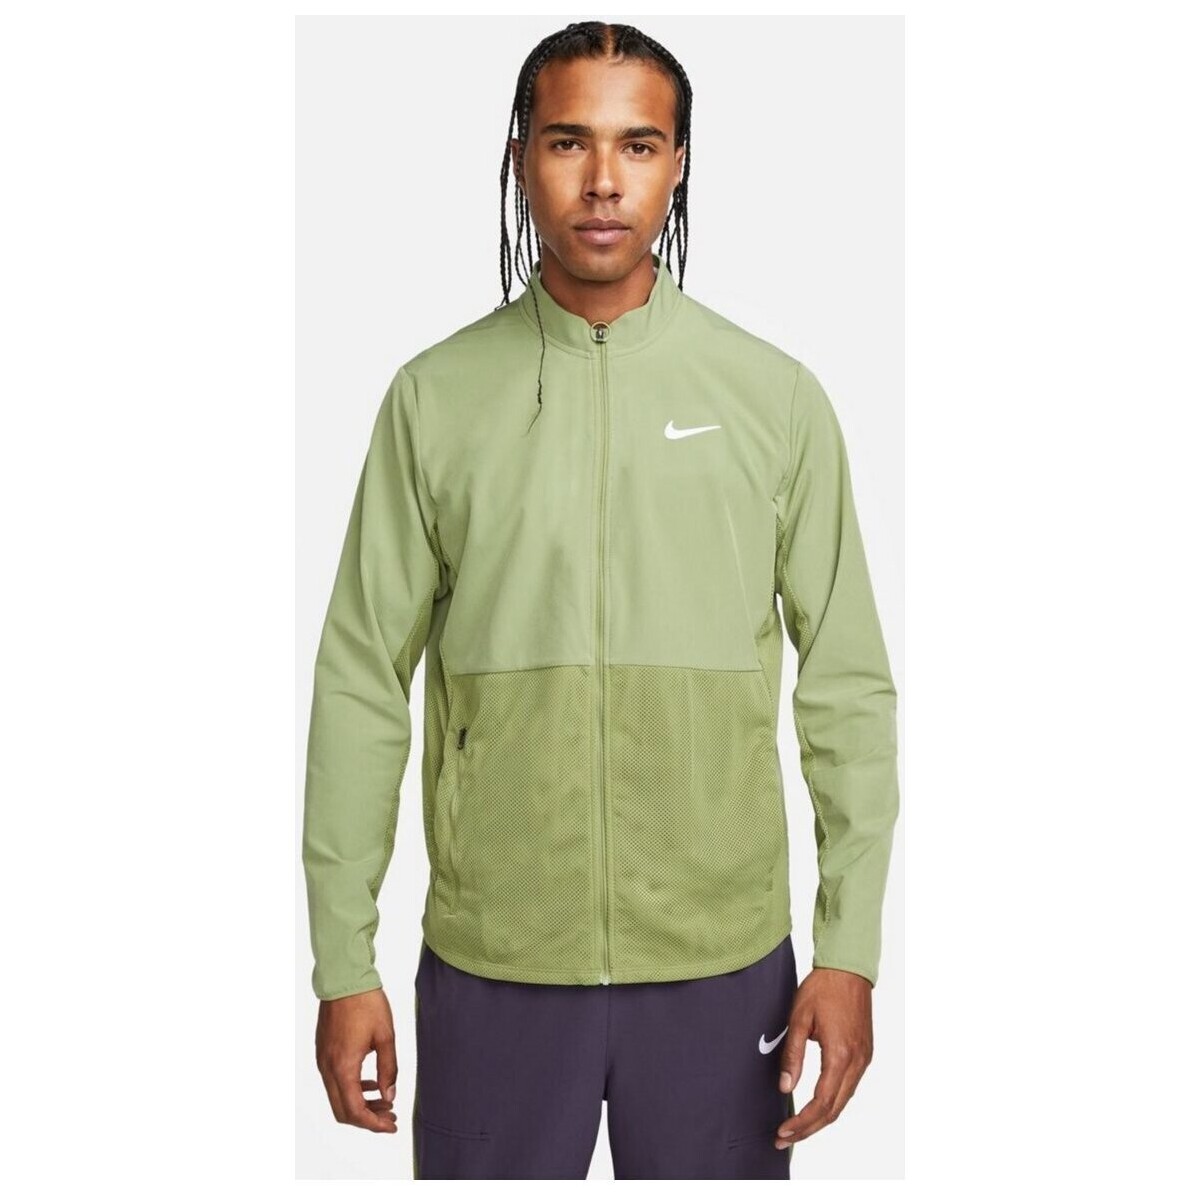 Textiel Heren Wind jackets Nike  Groen